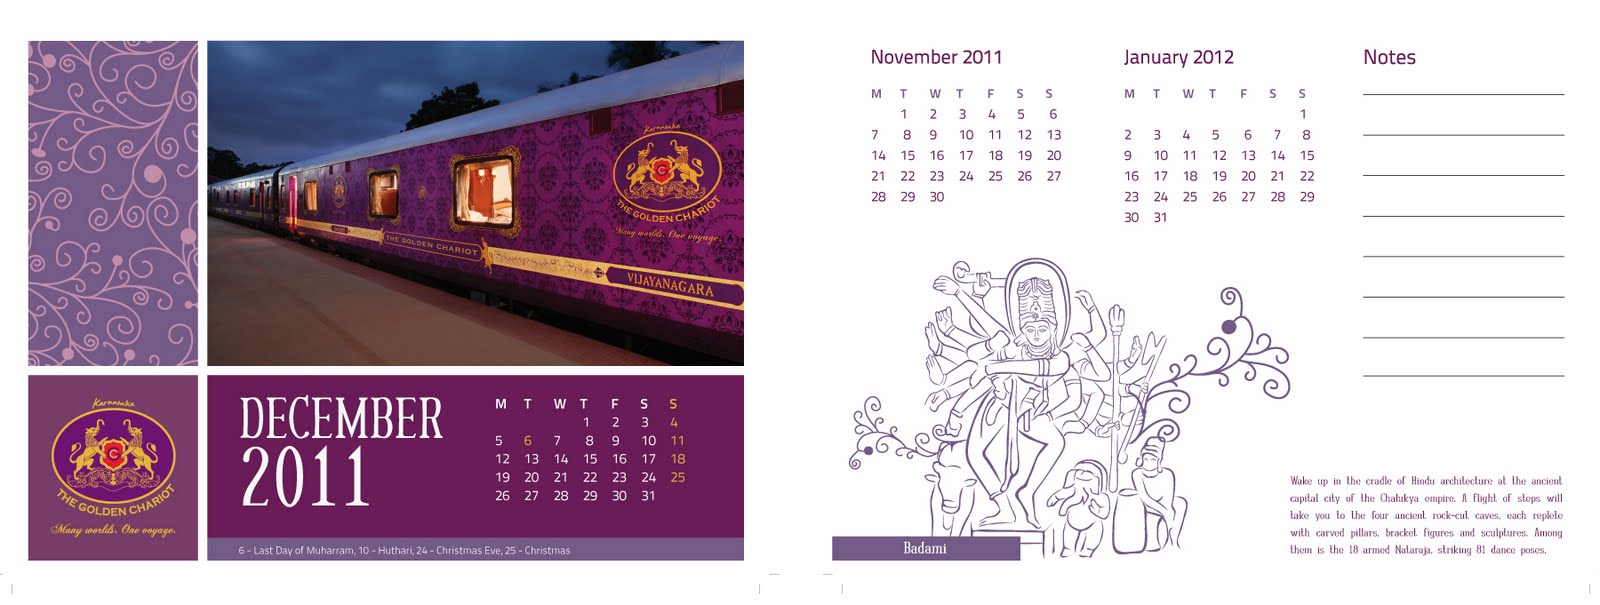 The Golden Chariot - Karnataka | Calendar mock-up - 1 | Stark Communications Pvt Ltd